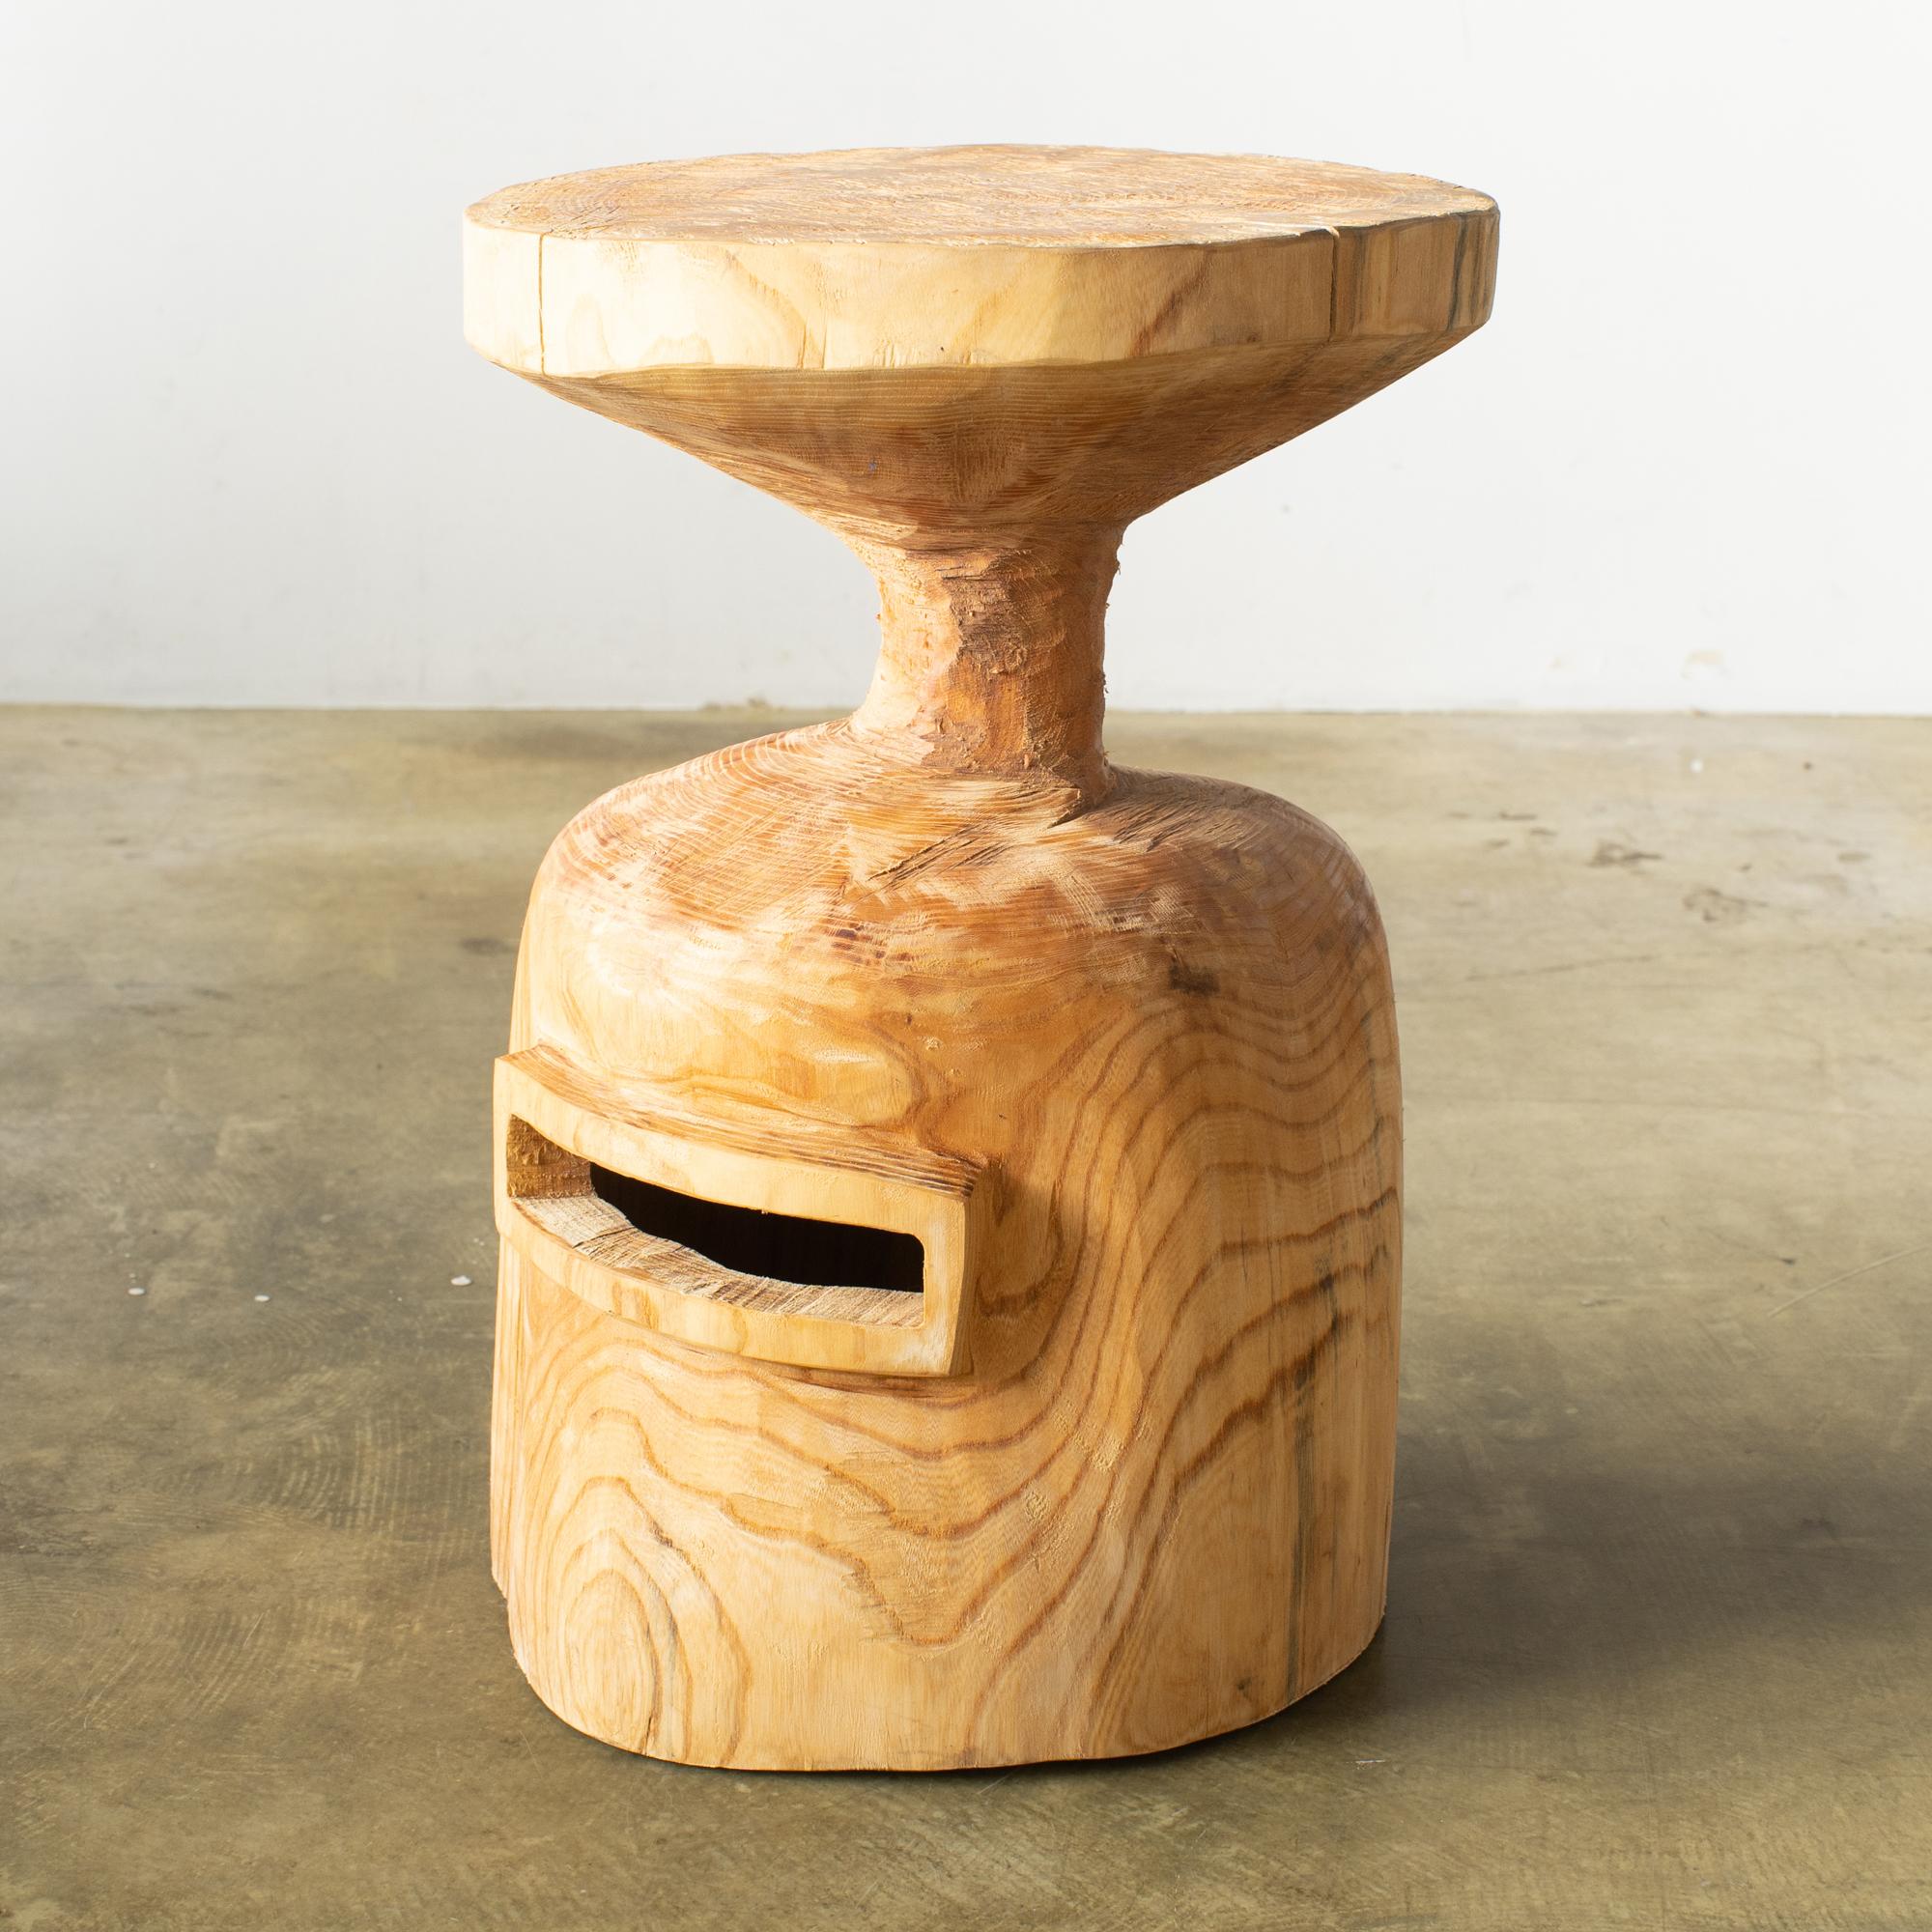 Tribal Table d'appoint Hiroyuki Nishimura et tabouret en bois sculptural 9,07 avec vernis tribal en vente